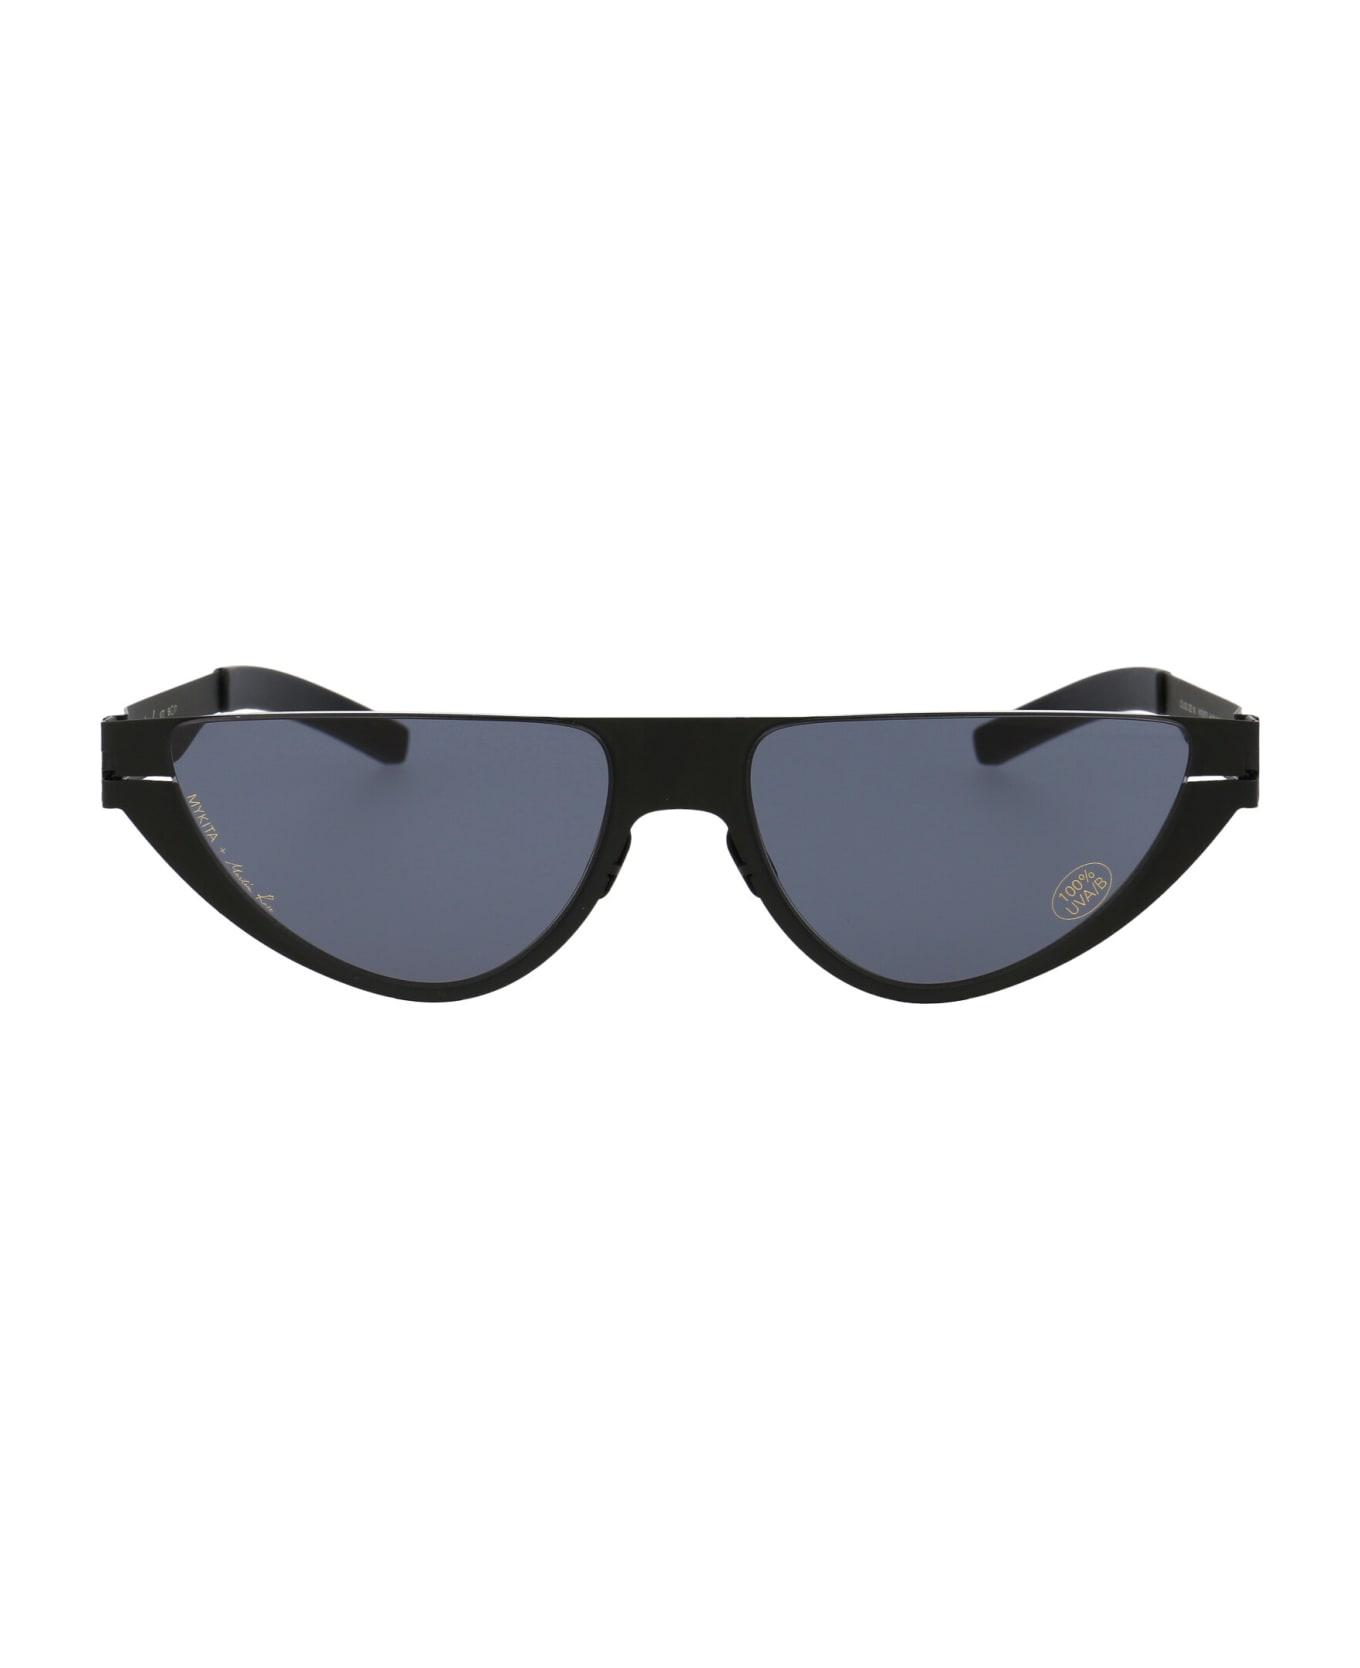 Mykita Kitt Sunglasses - 002 BLACK DARKGREY SOLID